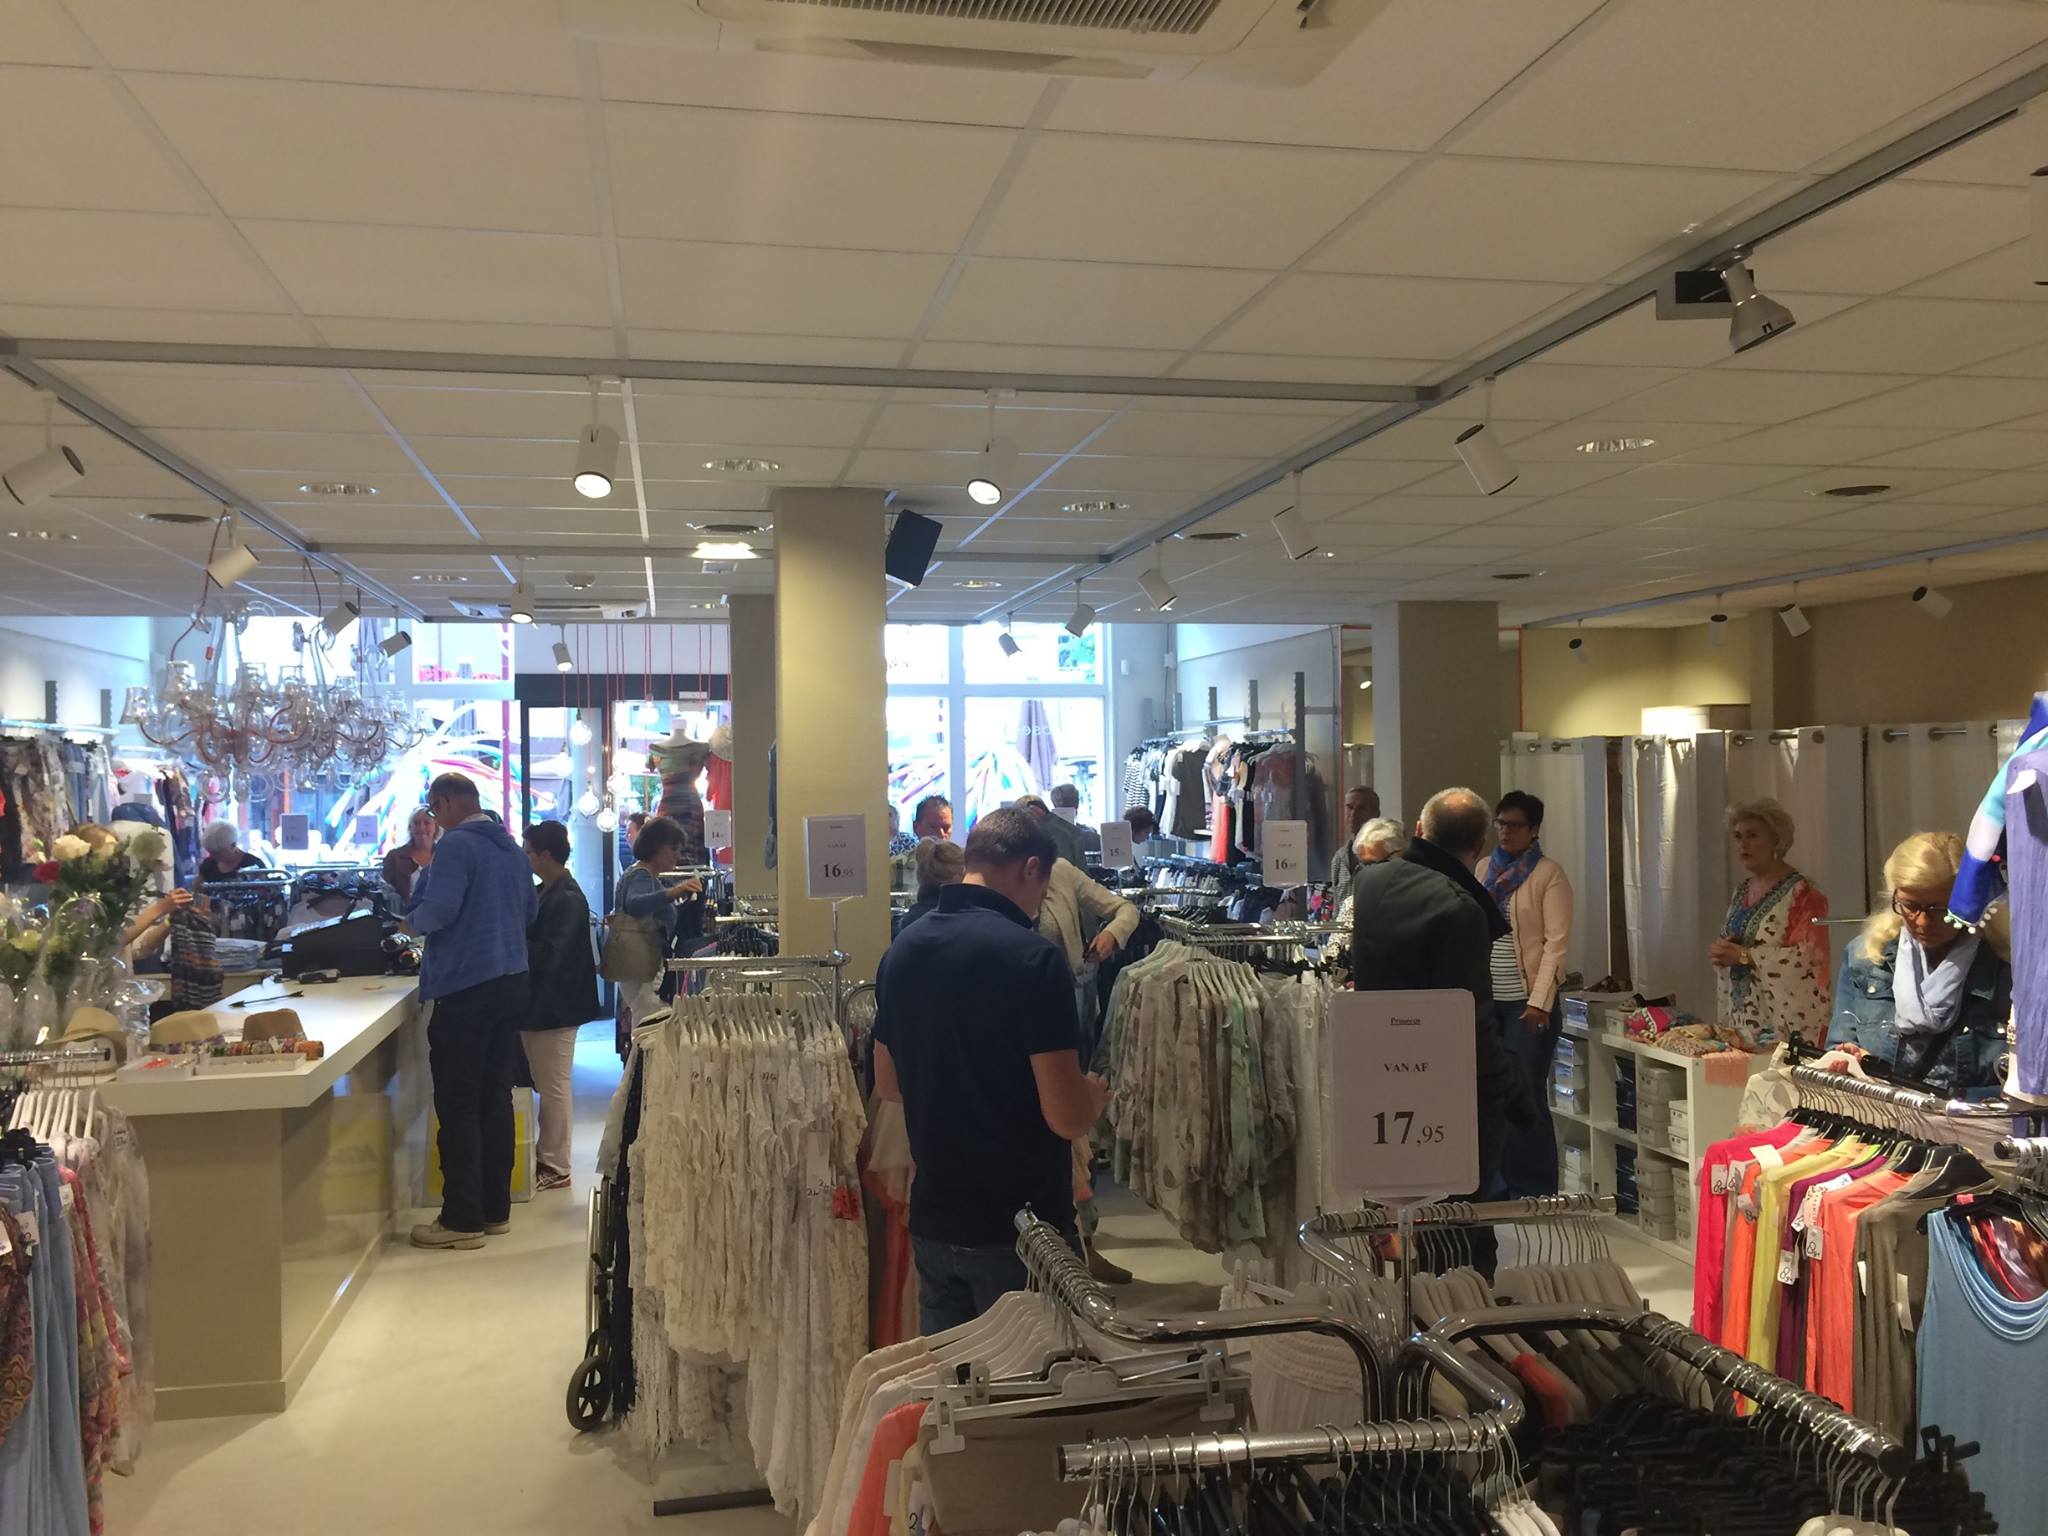 Prosecco mode Domburg op VisitDomburg - foto van dameskledingwinkel aan binnenkant